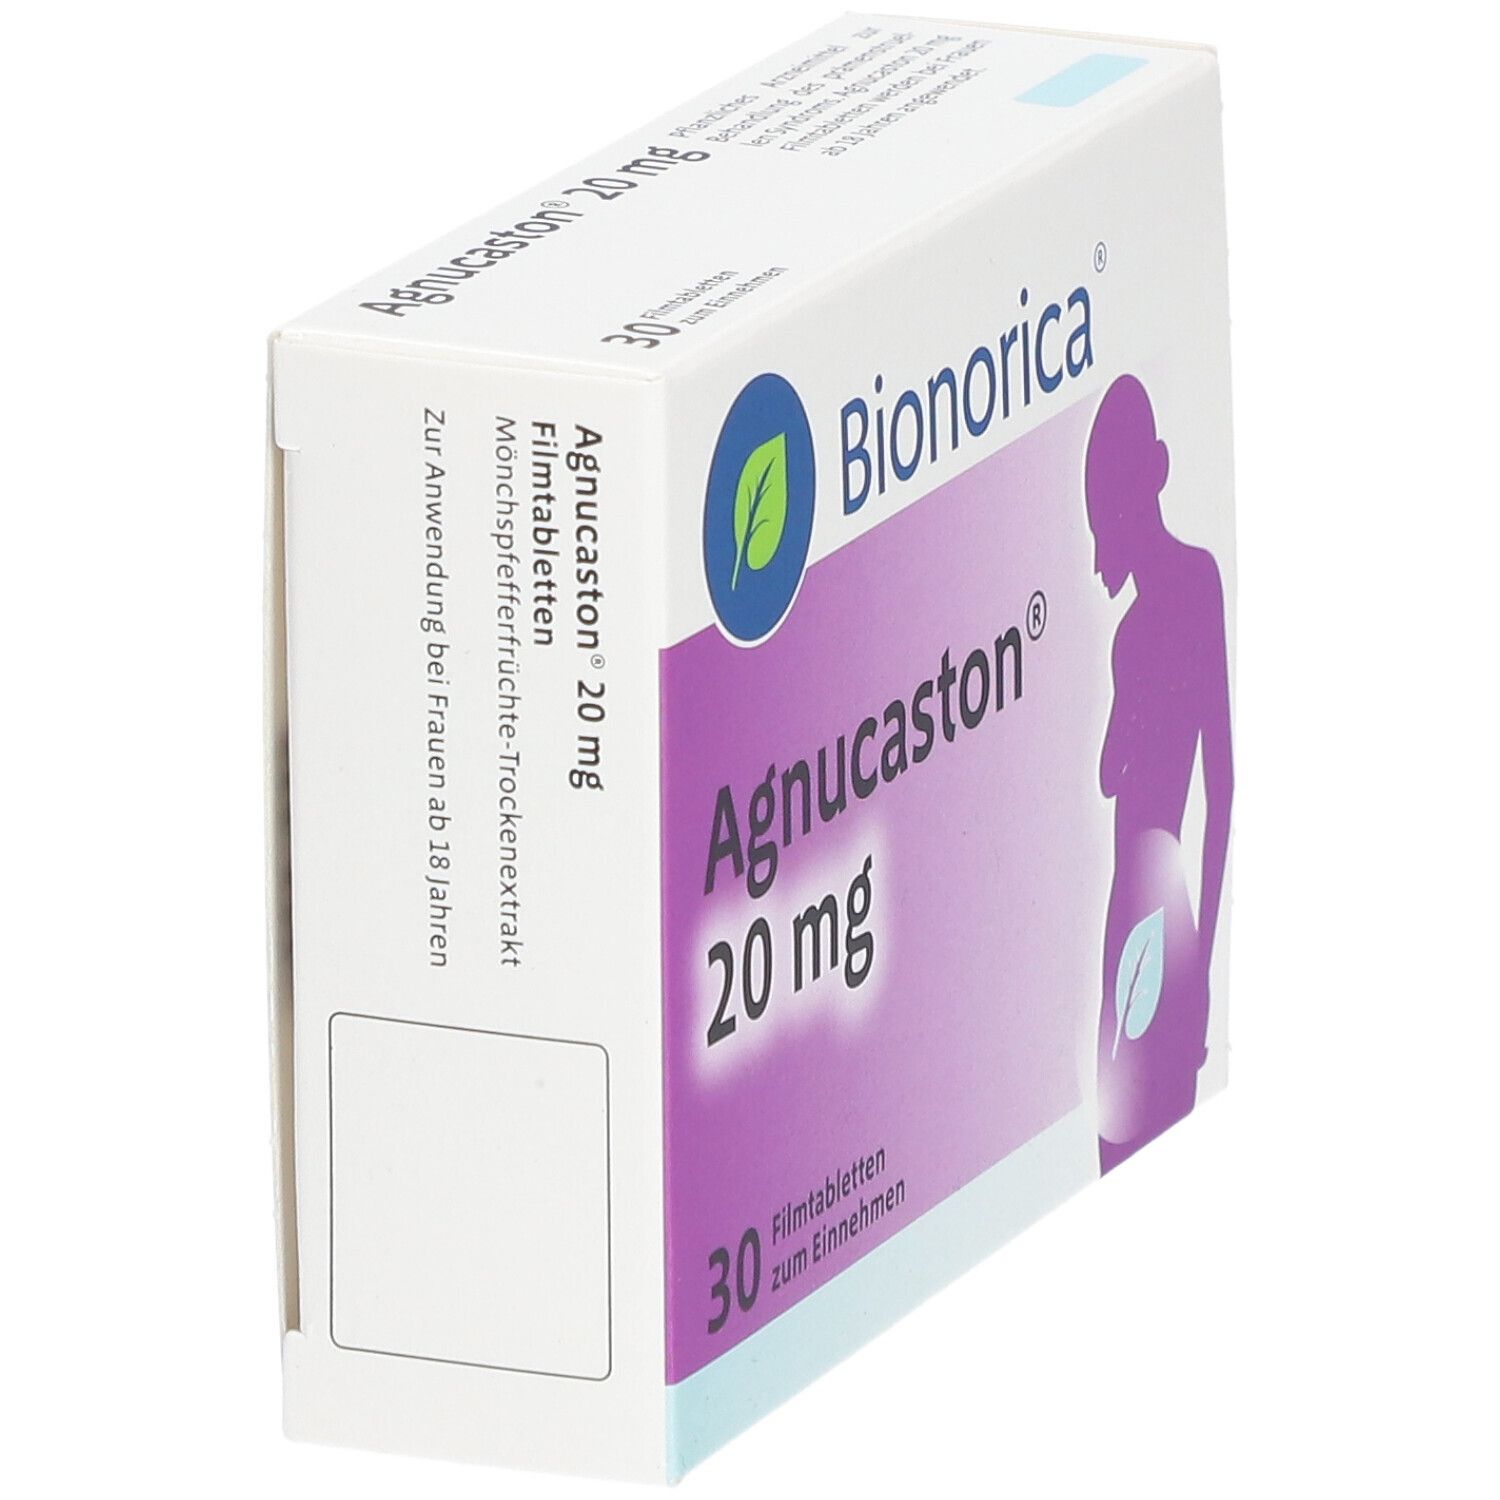 Bionorica® Agnucaston® 20 mg